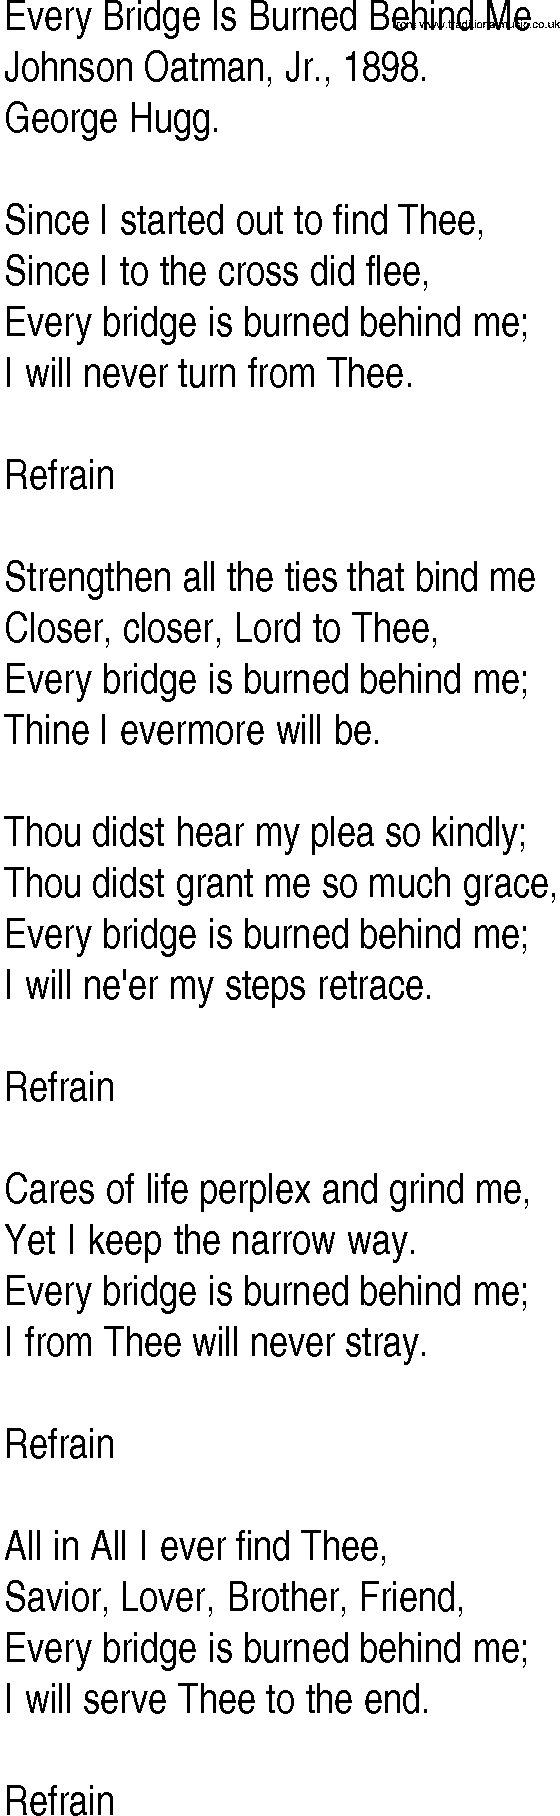 Hymn and Gospel Song: Every Bridge Is Burned Behind Me by Johnson Oatman Jr lyrics